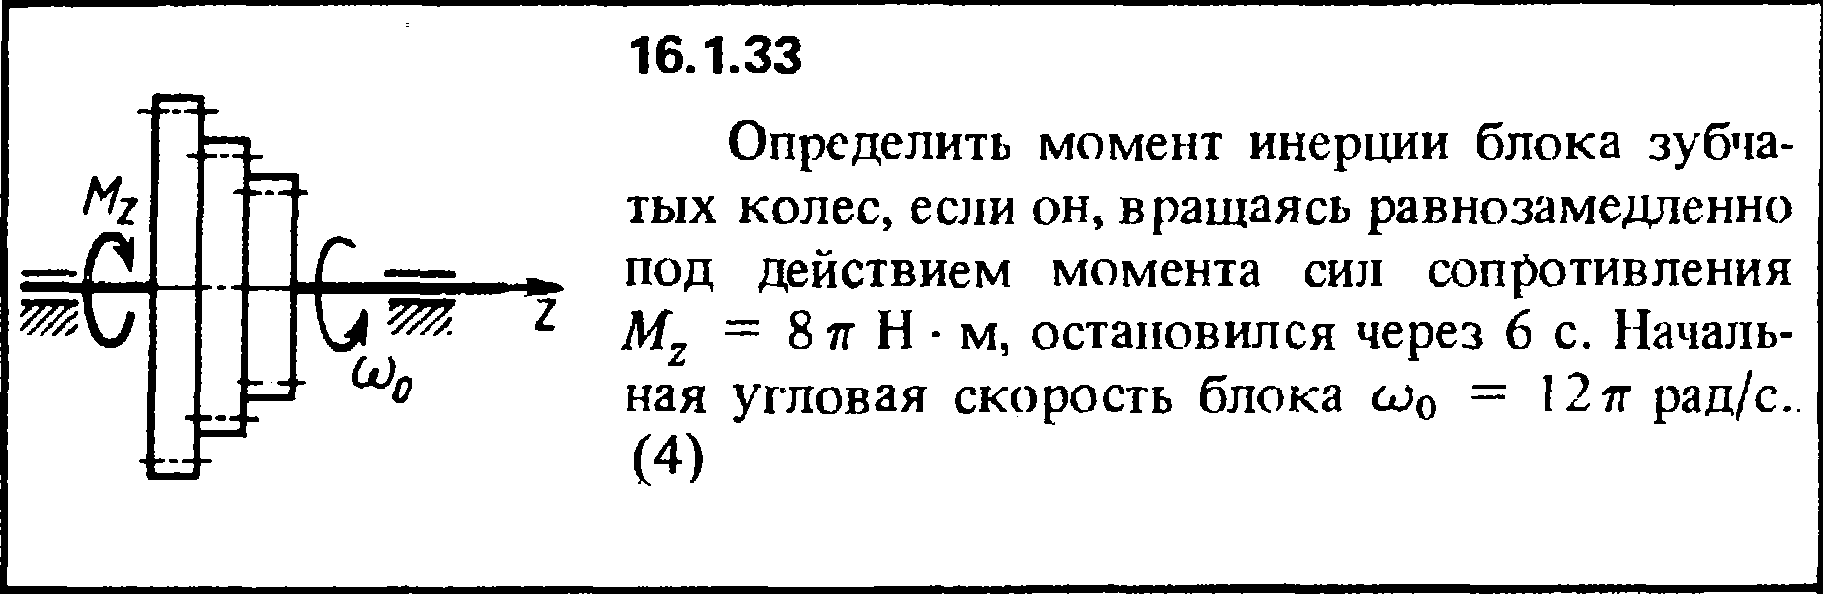 Решение задачи 16.1.33 из сборника Кепе О.Е. 1989 года